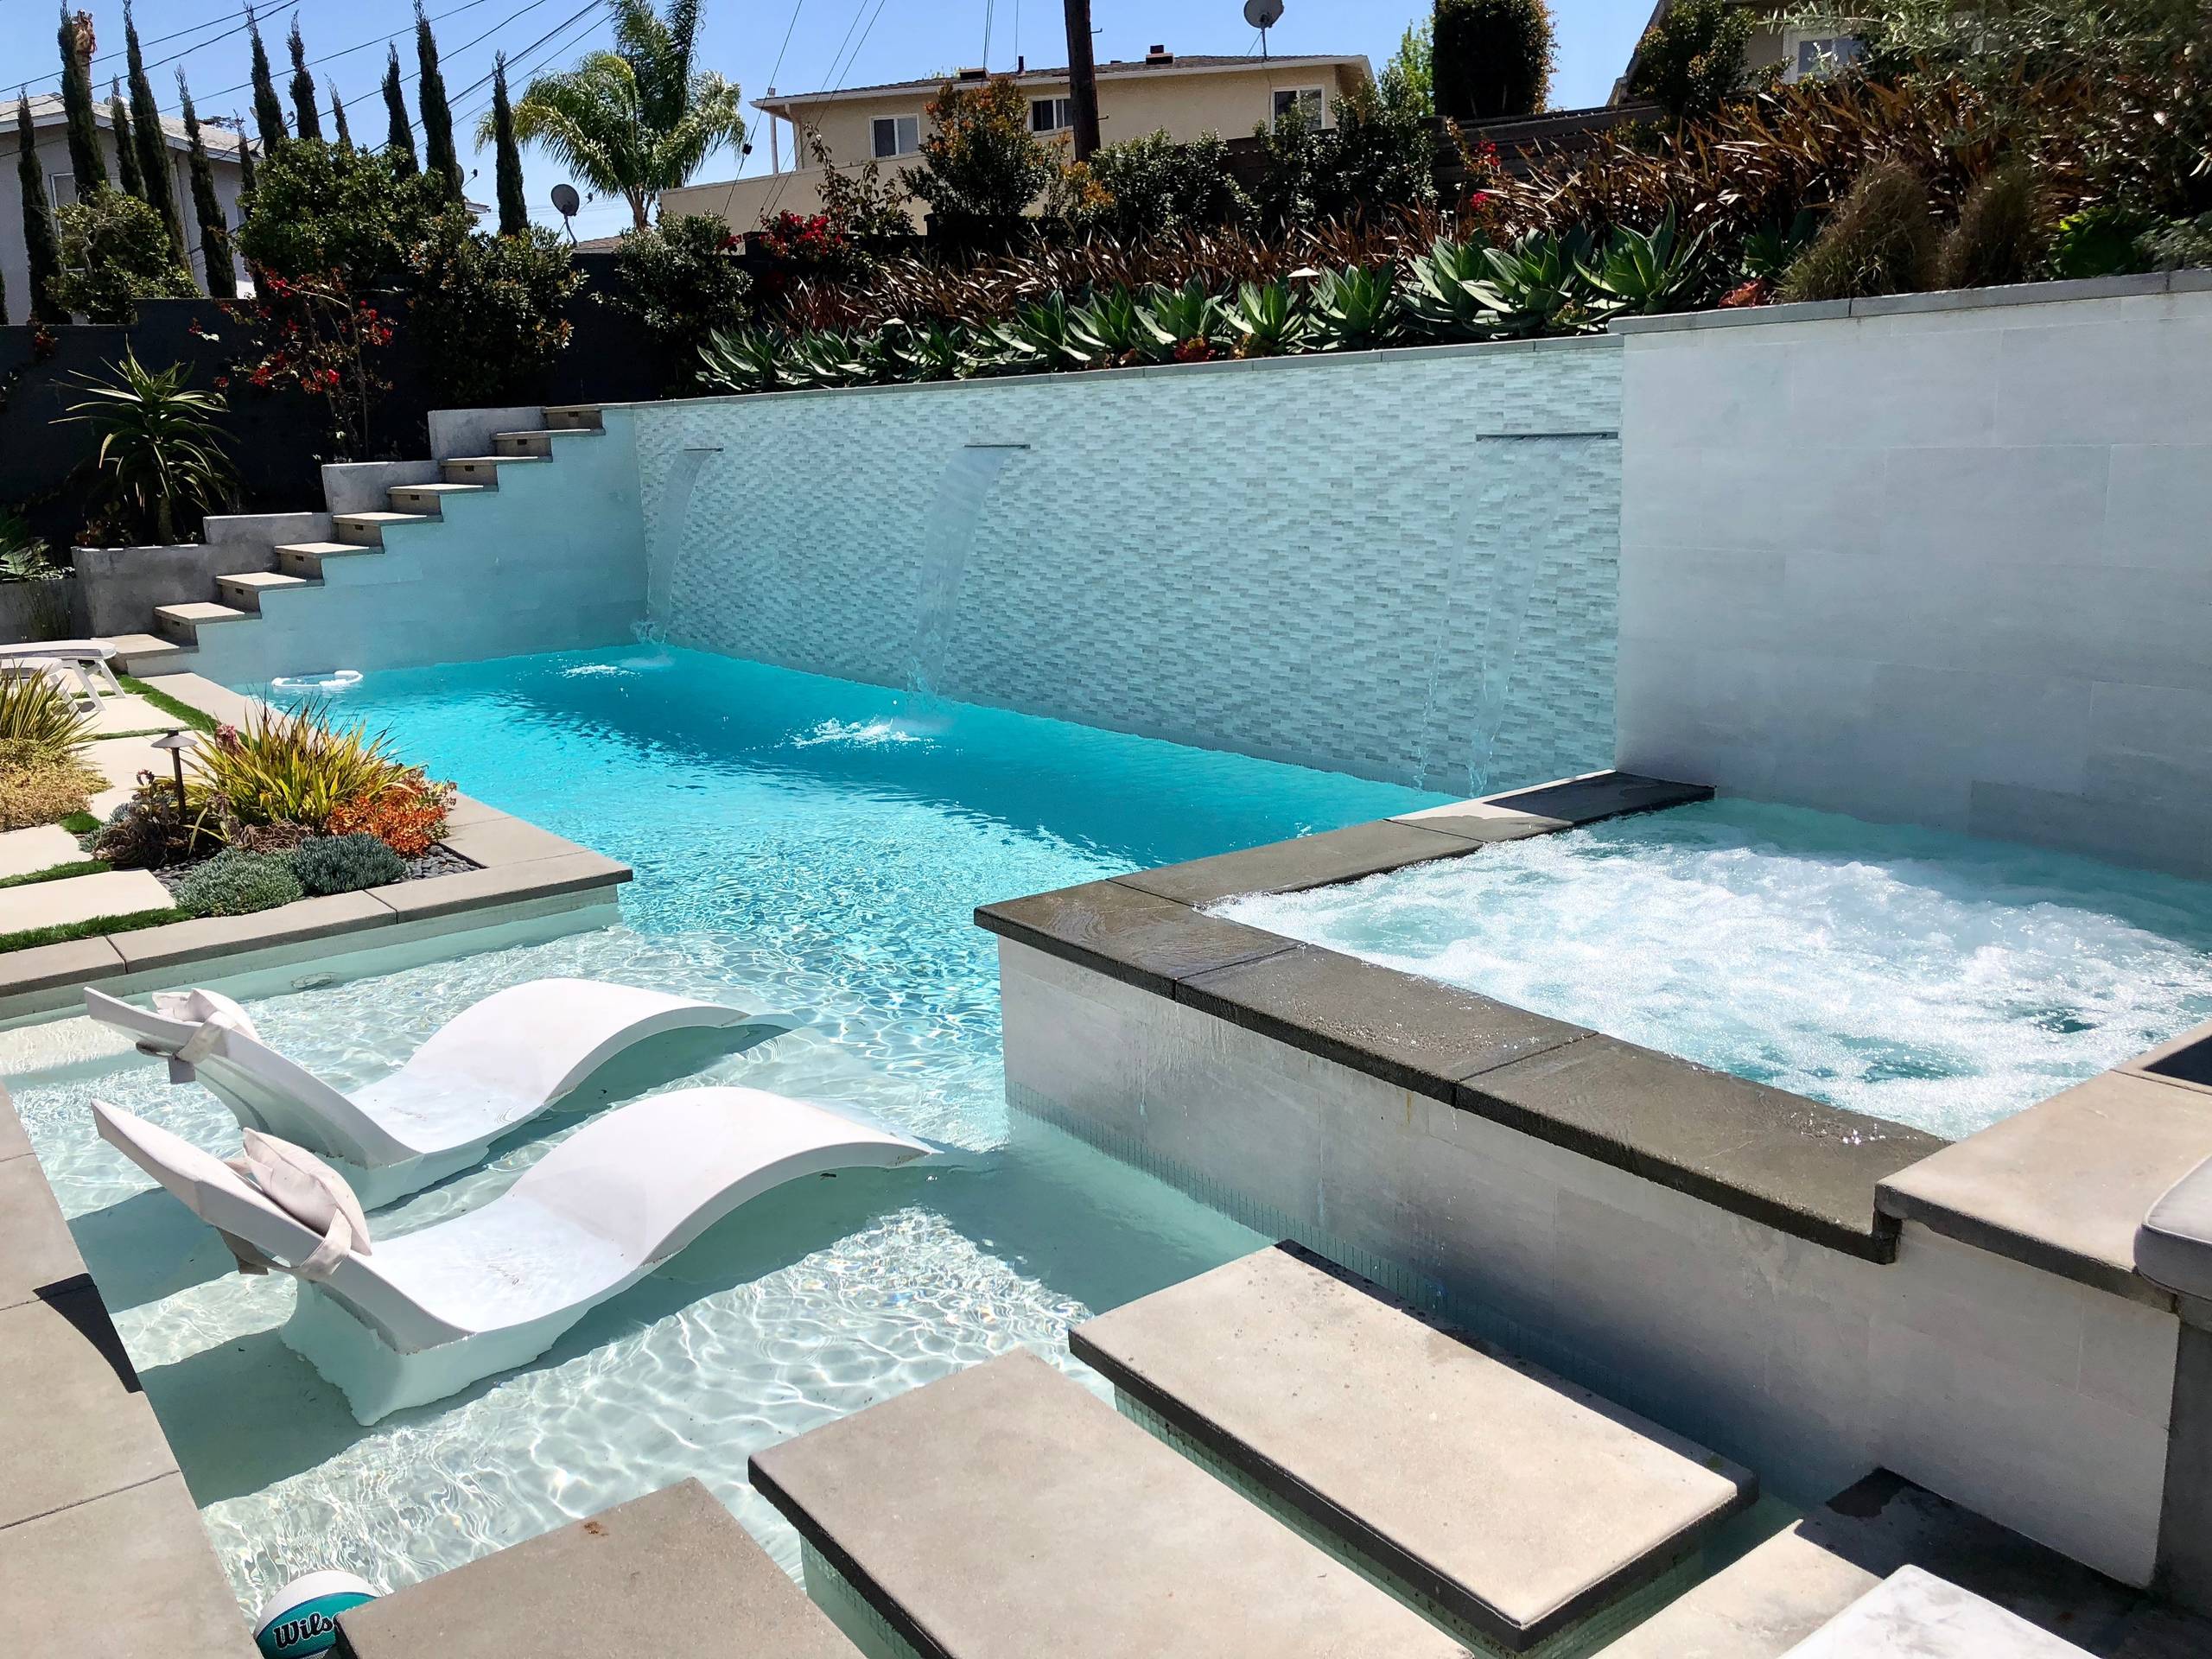 Los Angeles - Contemporary Black & White Rectangular Pool & Spa